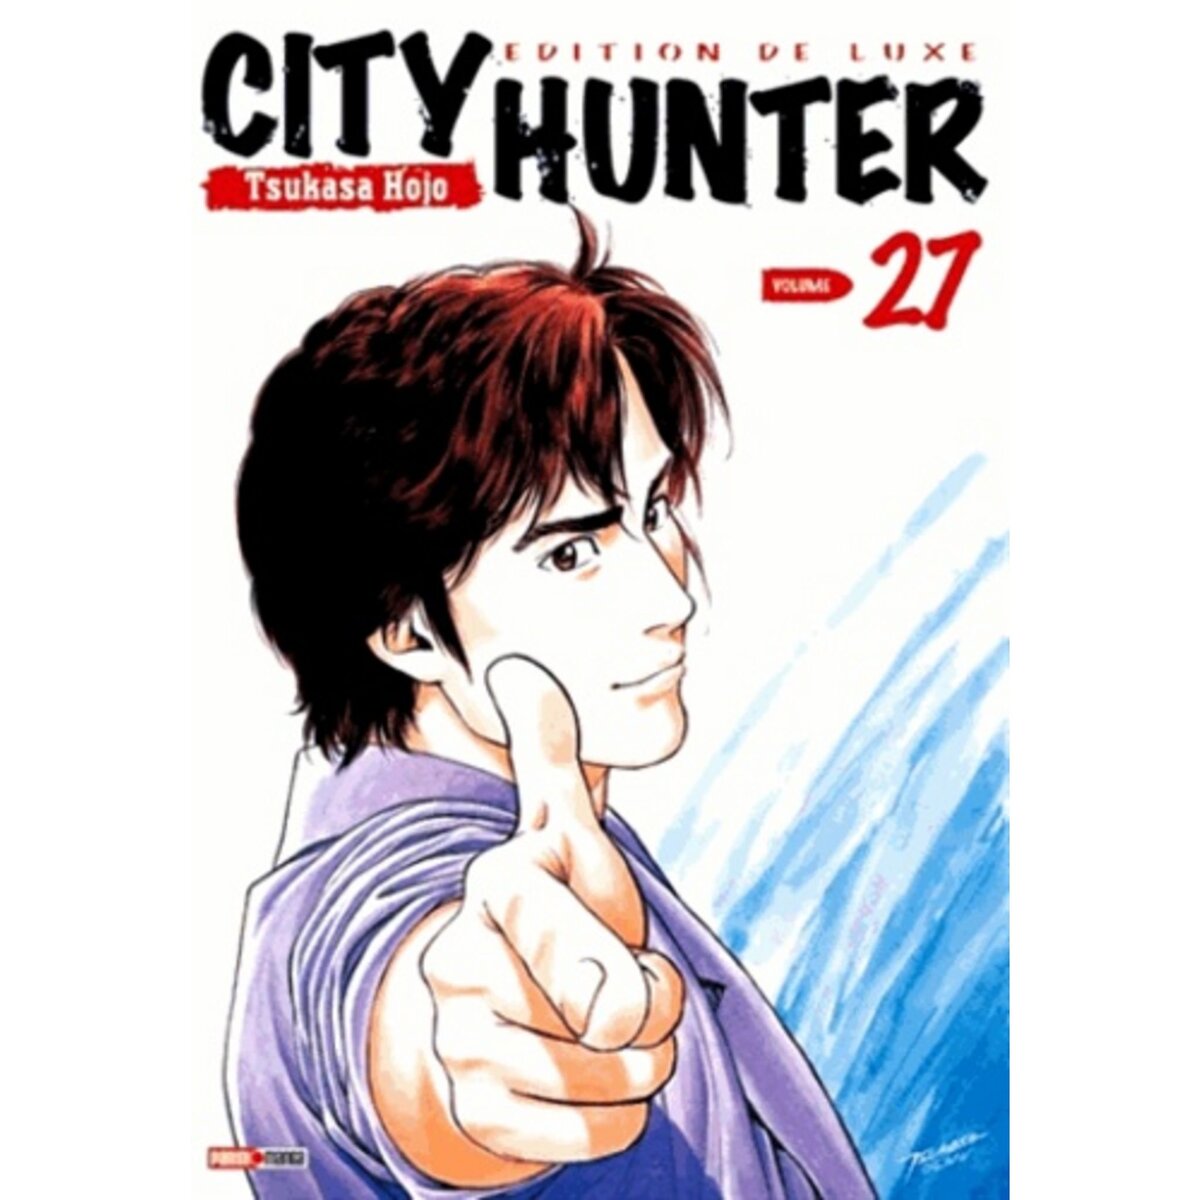  CITY HUNTER (NICKY LARSON) TOME 27 . EDITION DE LUXE, Hojo Tsukasa